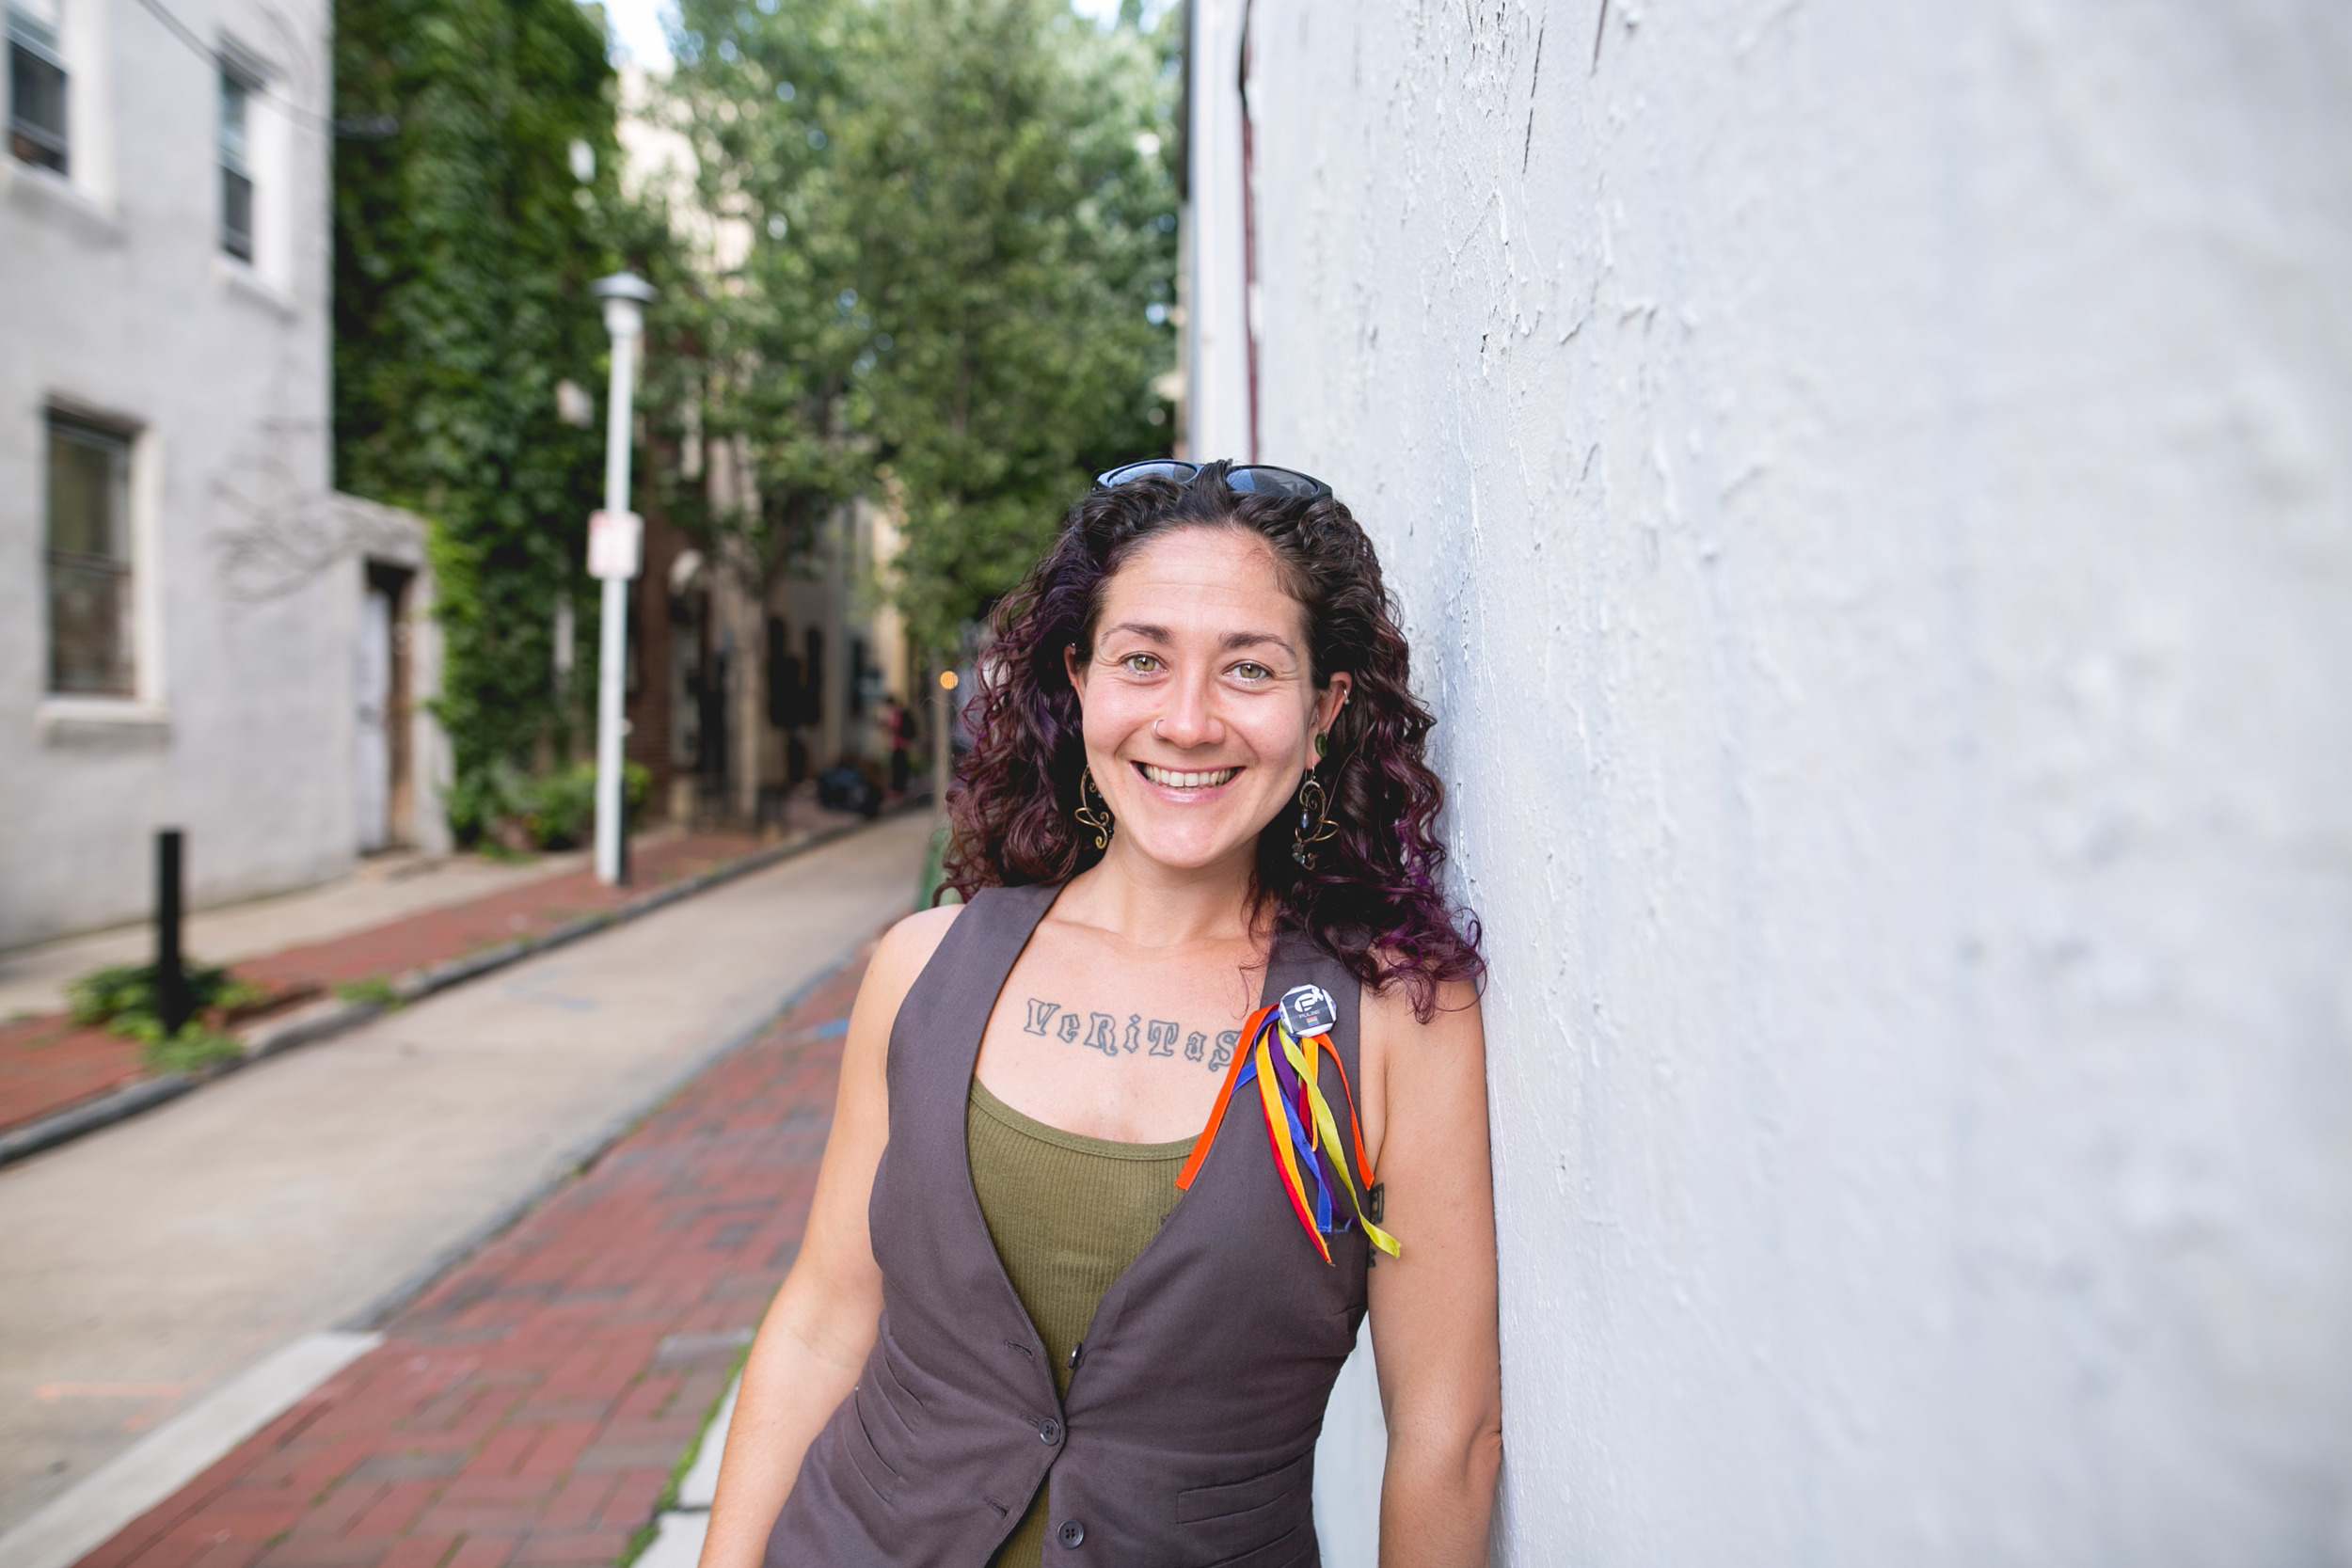  Philadelphia Weekly Forward Philly Headshots by LGBTQ photographer 